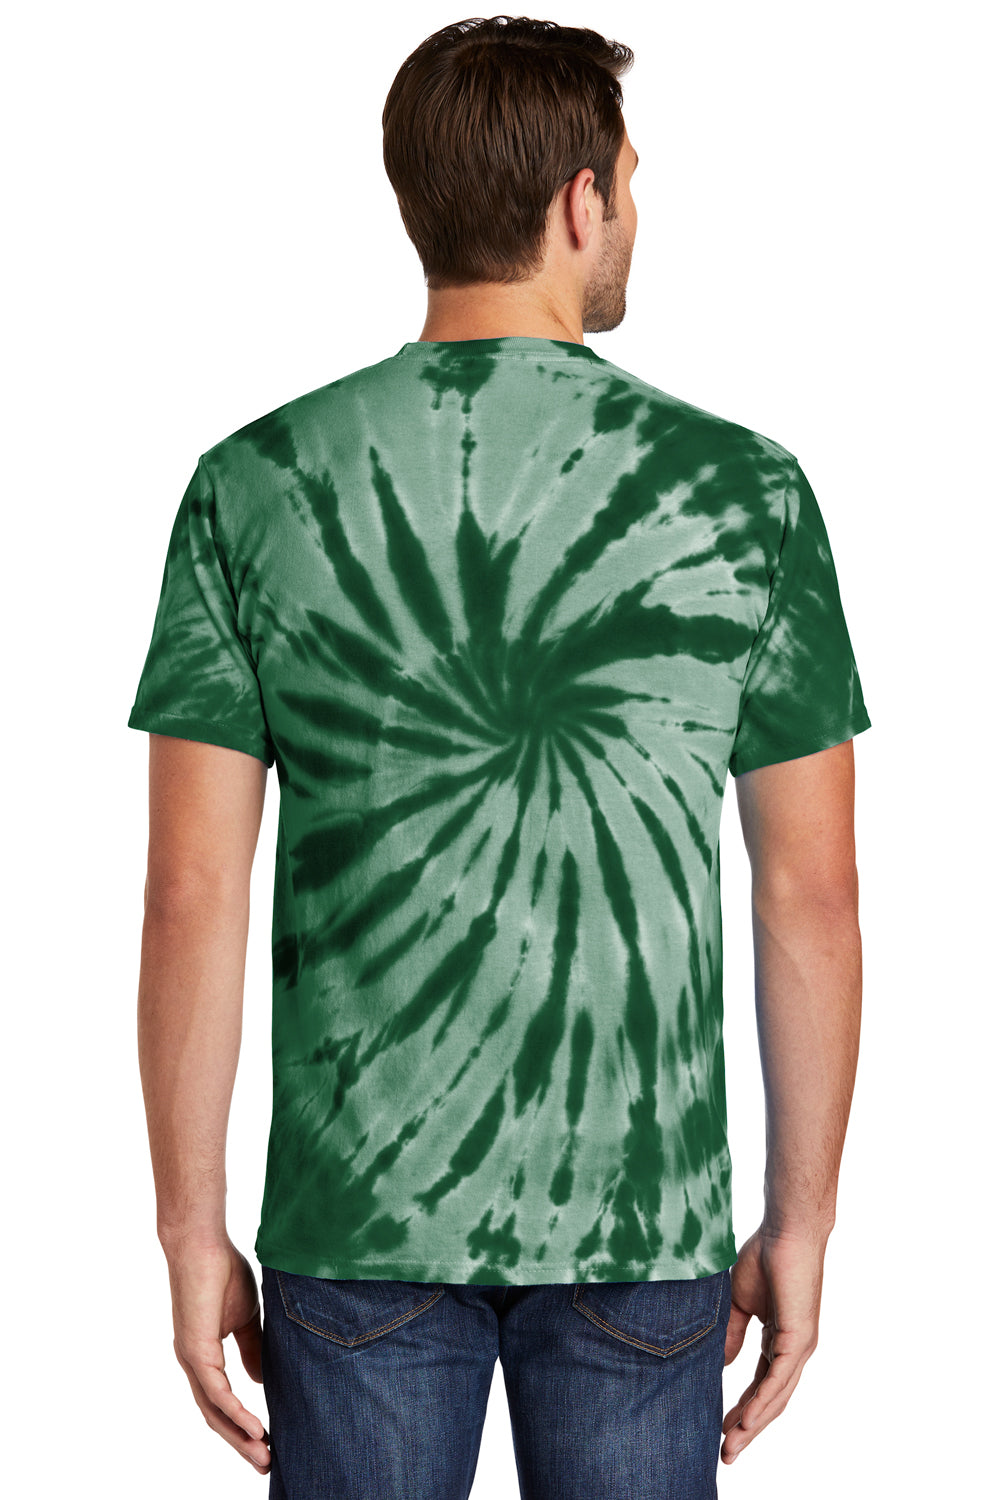 Port & Company PC147 Mens Tie-Dye Short Sleeve Crewneck T-Shirt Forest Green Back